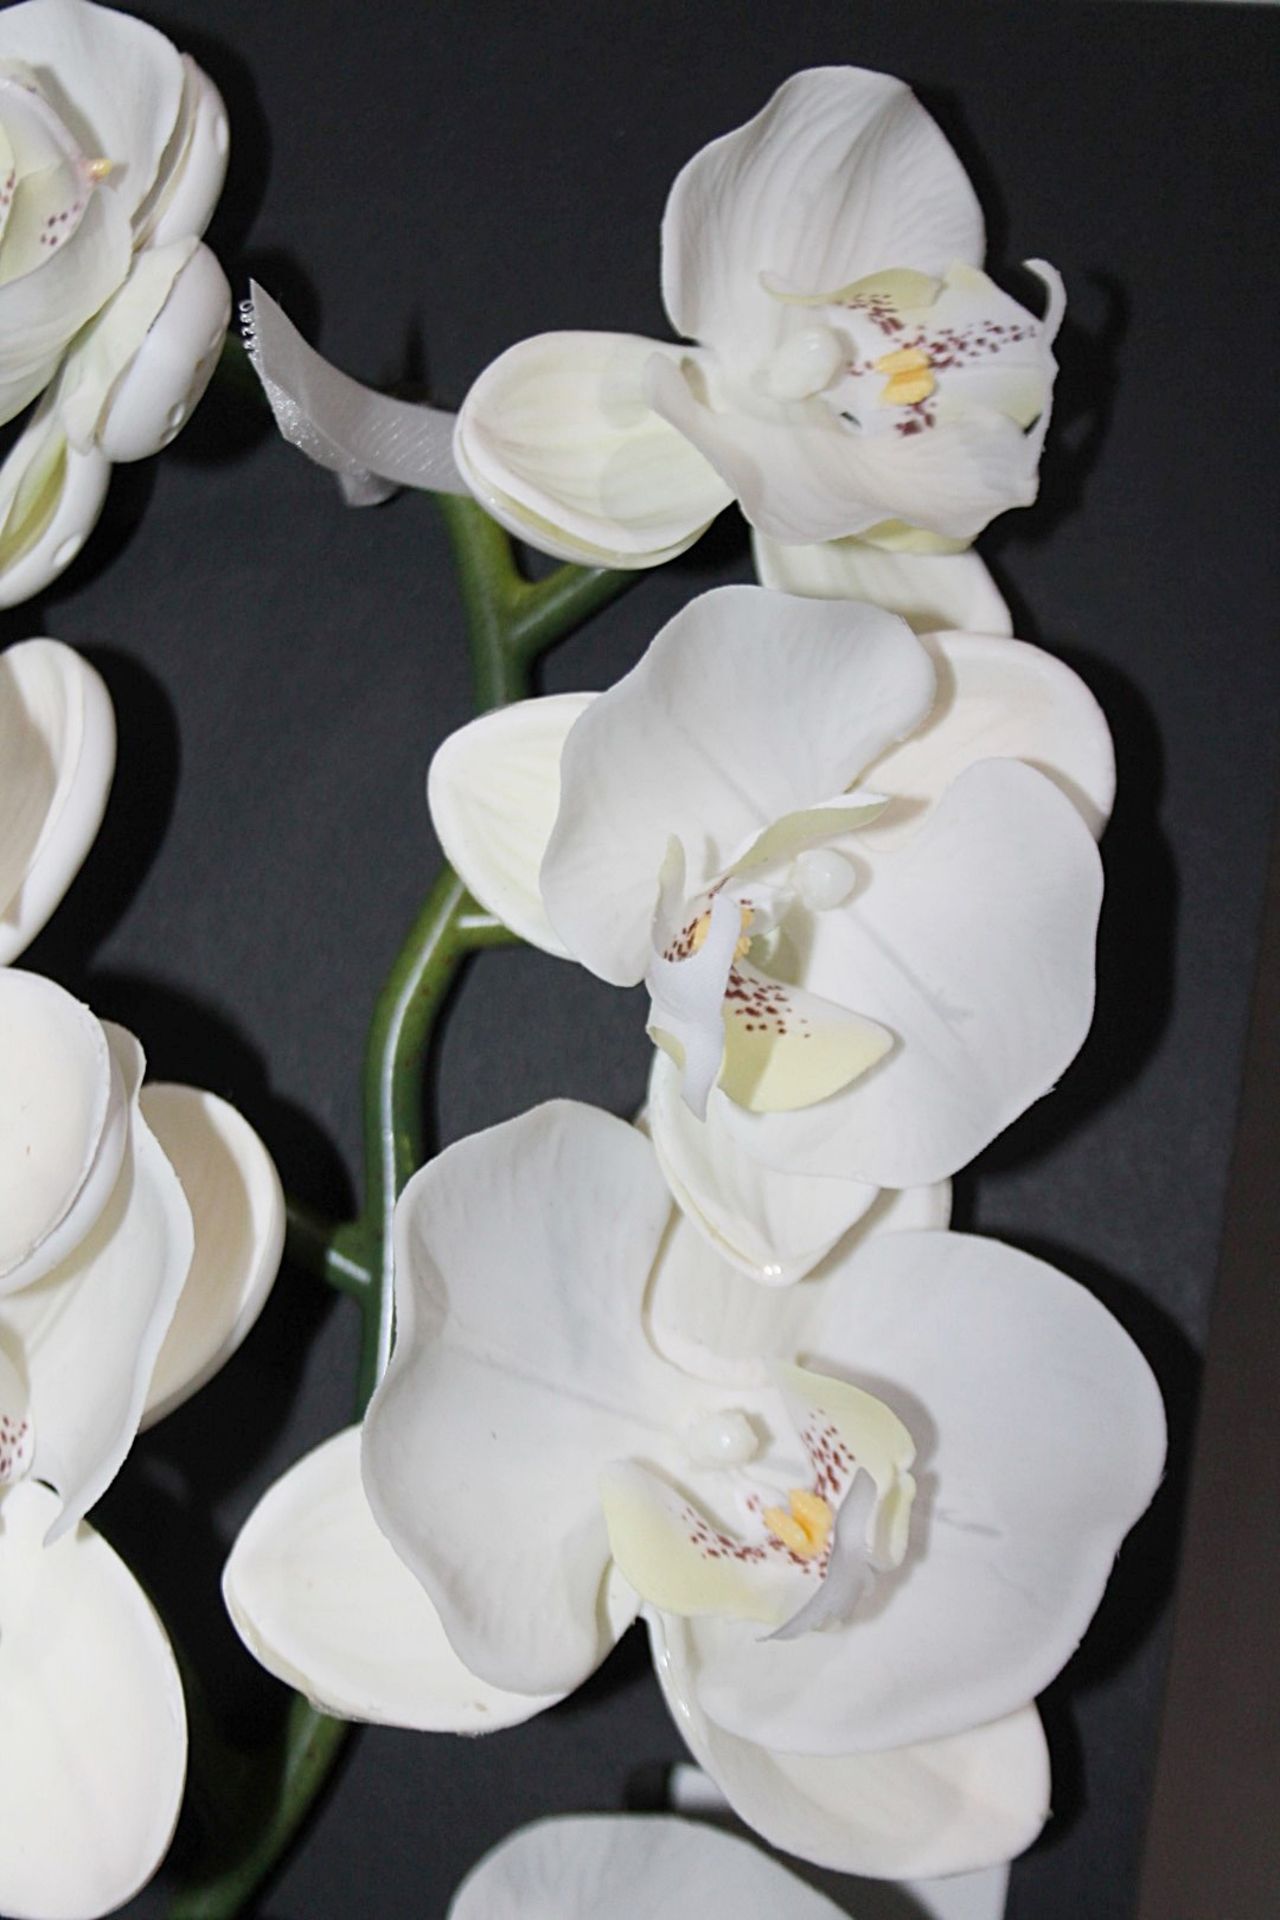 1 x SENTI 'White Flowers' Orchid Luxury Italian Glass Diffuser (250ml) - Original Price £175.00 - Image 4 of 6